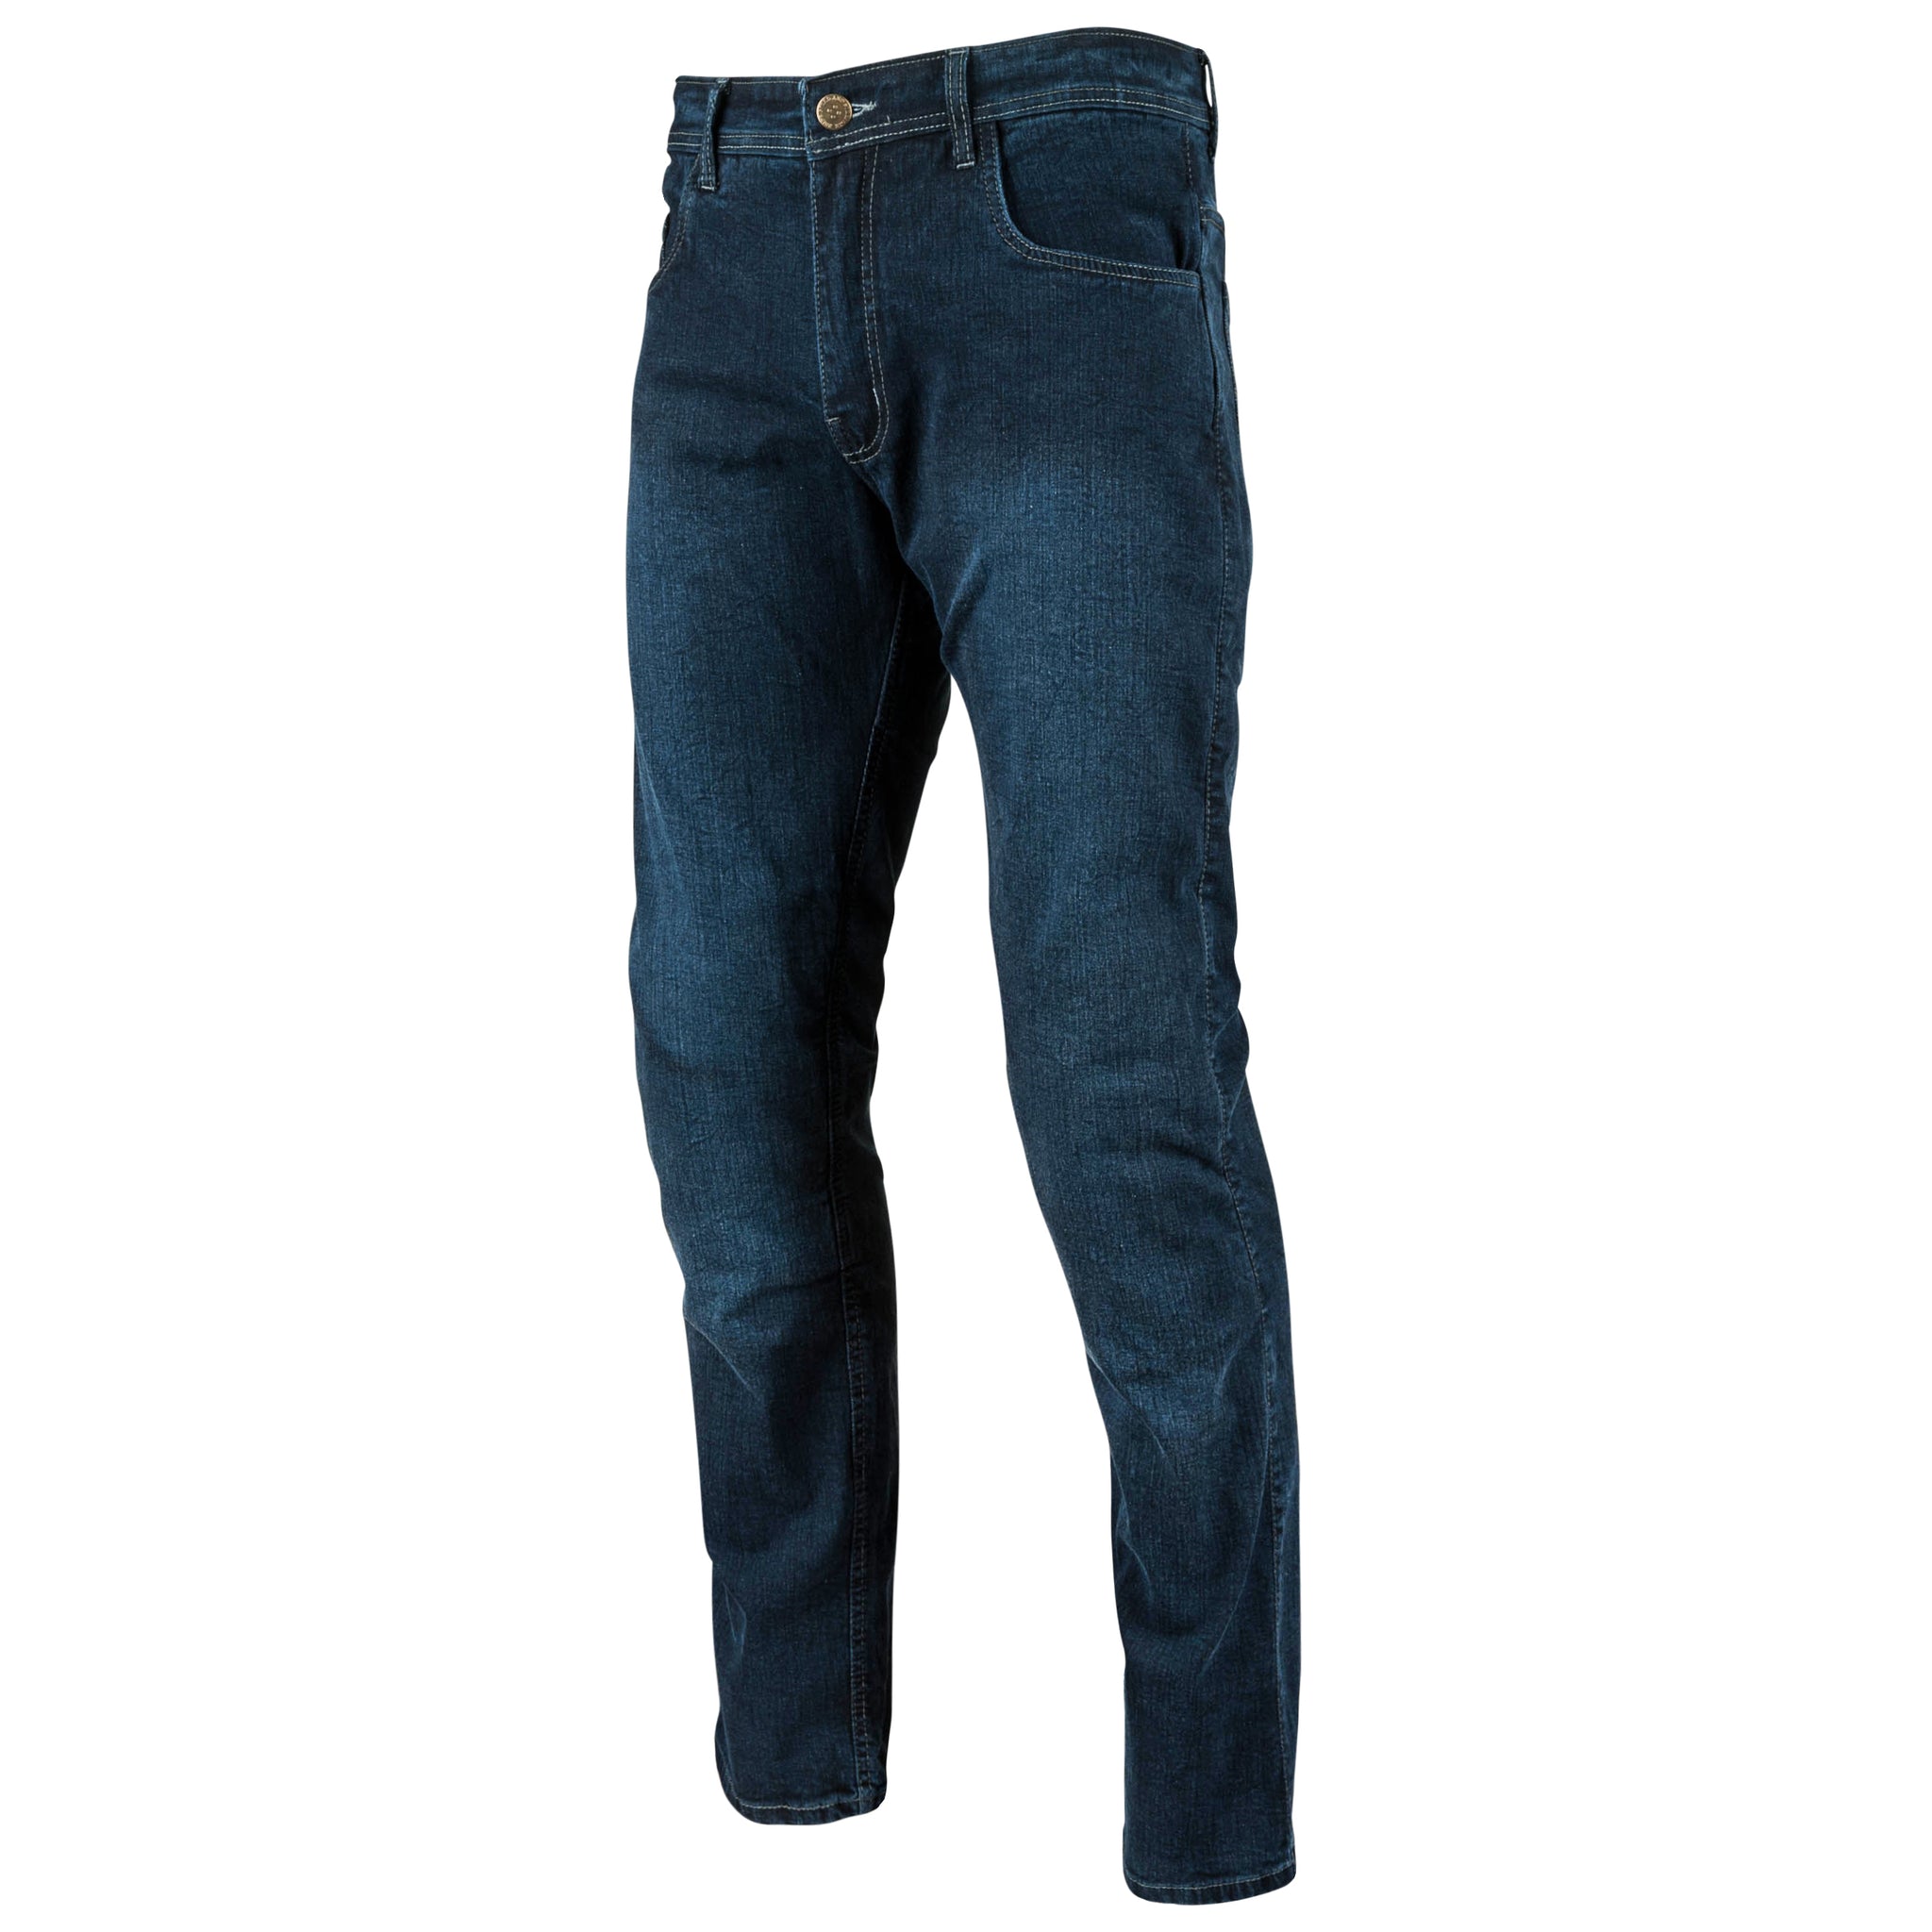 Buy the Women's Blue Denim Jeans Size 34/34